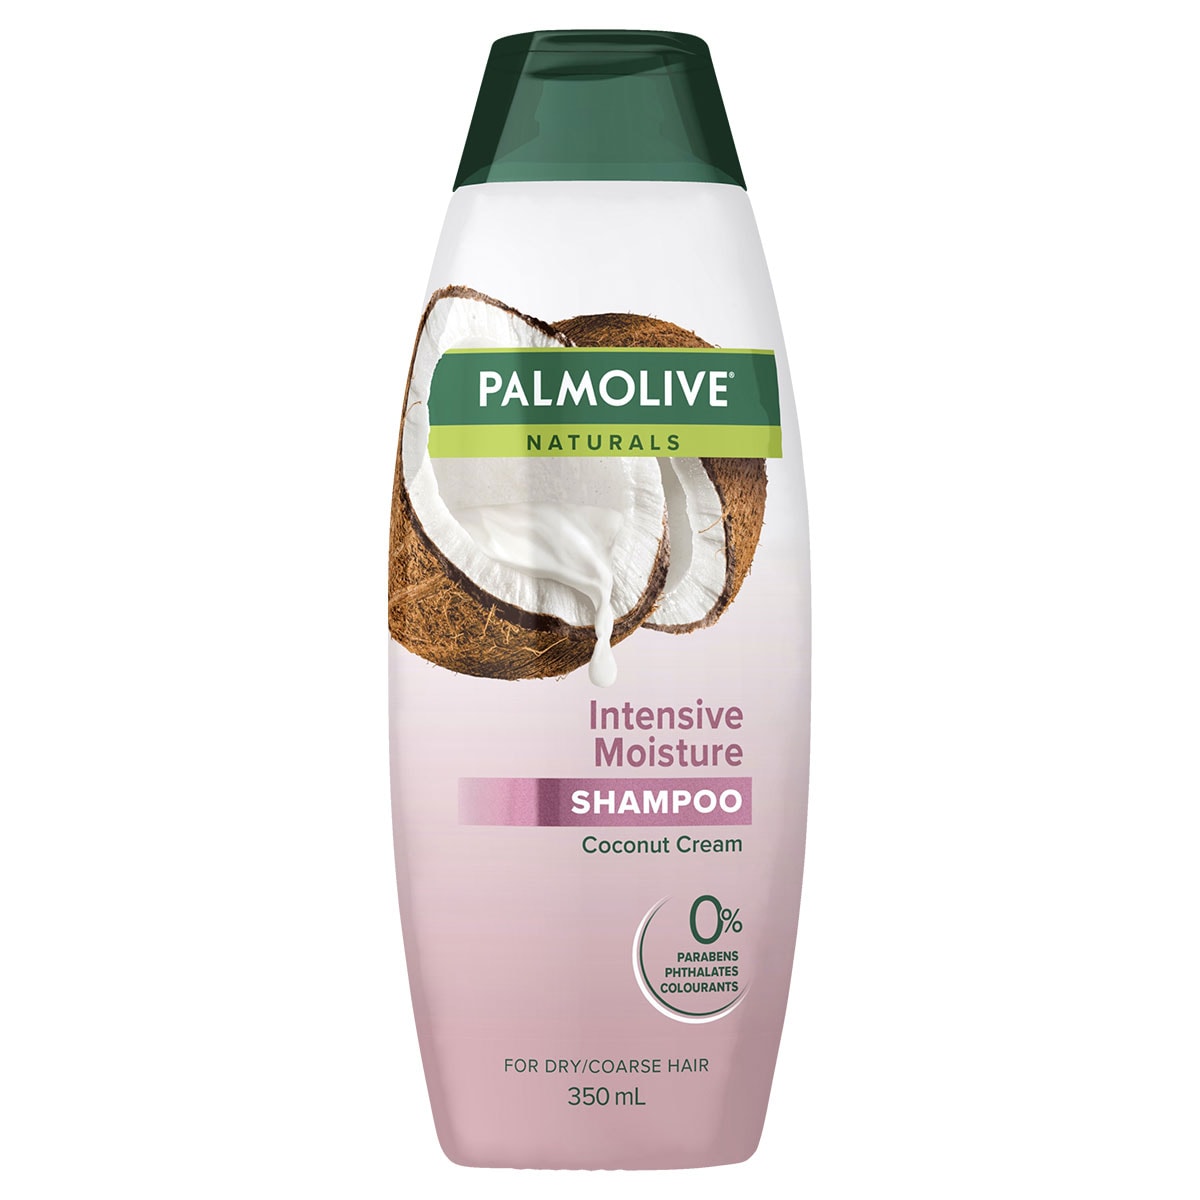 Palmolive Intensive Moisture Shampoo Coconut Cream 350ml